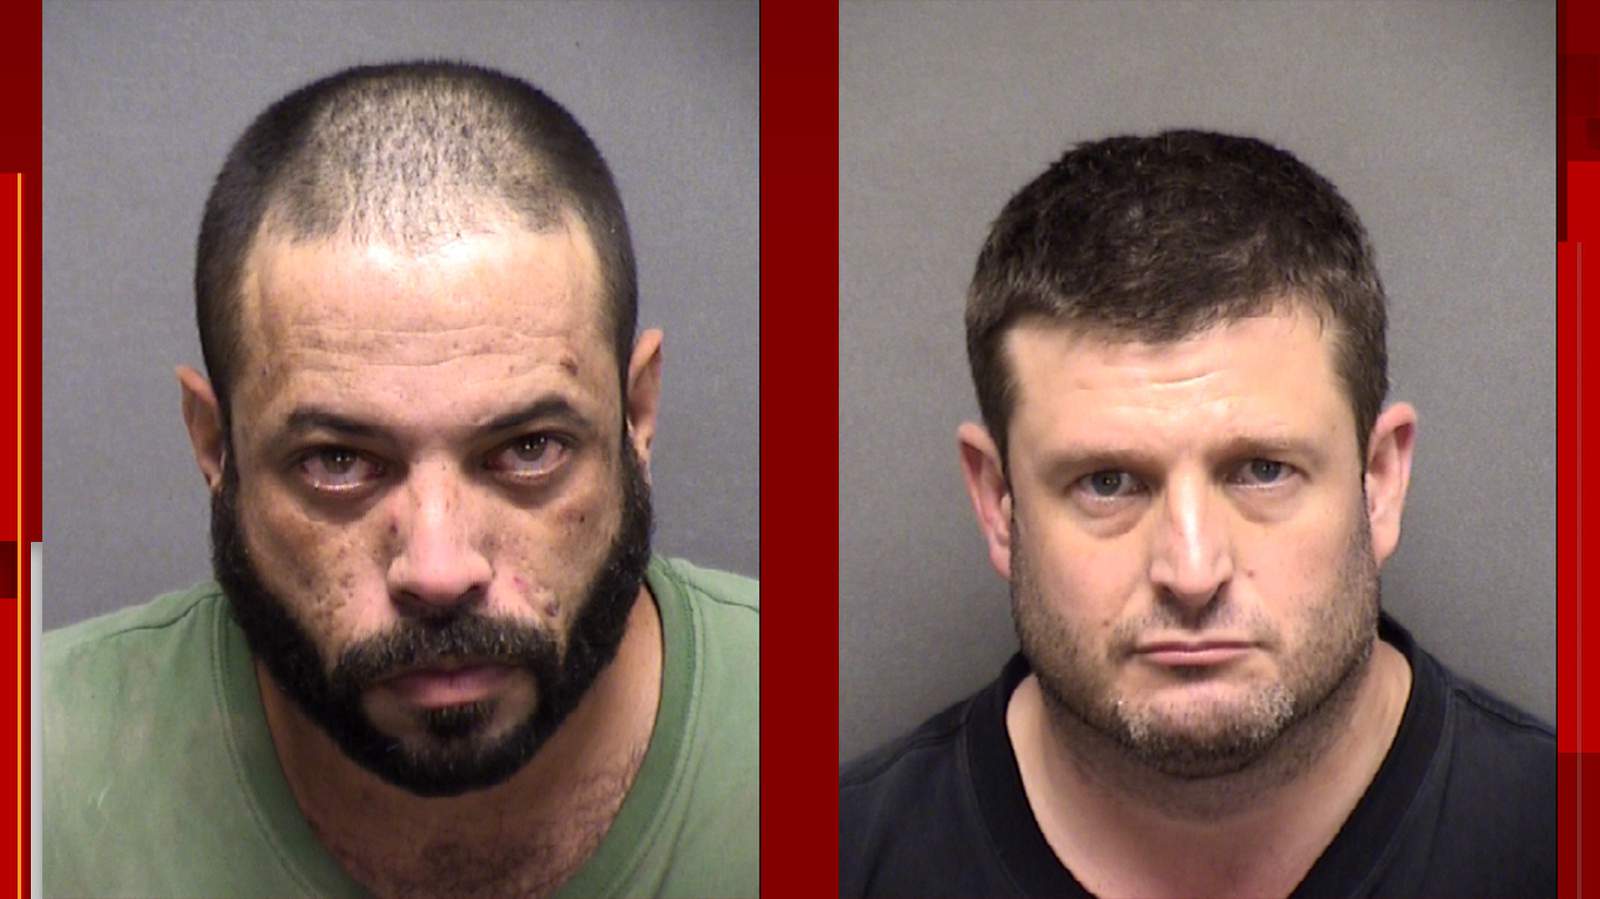 BCSO identifies 2 men arrested following bizarre carjacking attempts